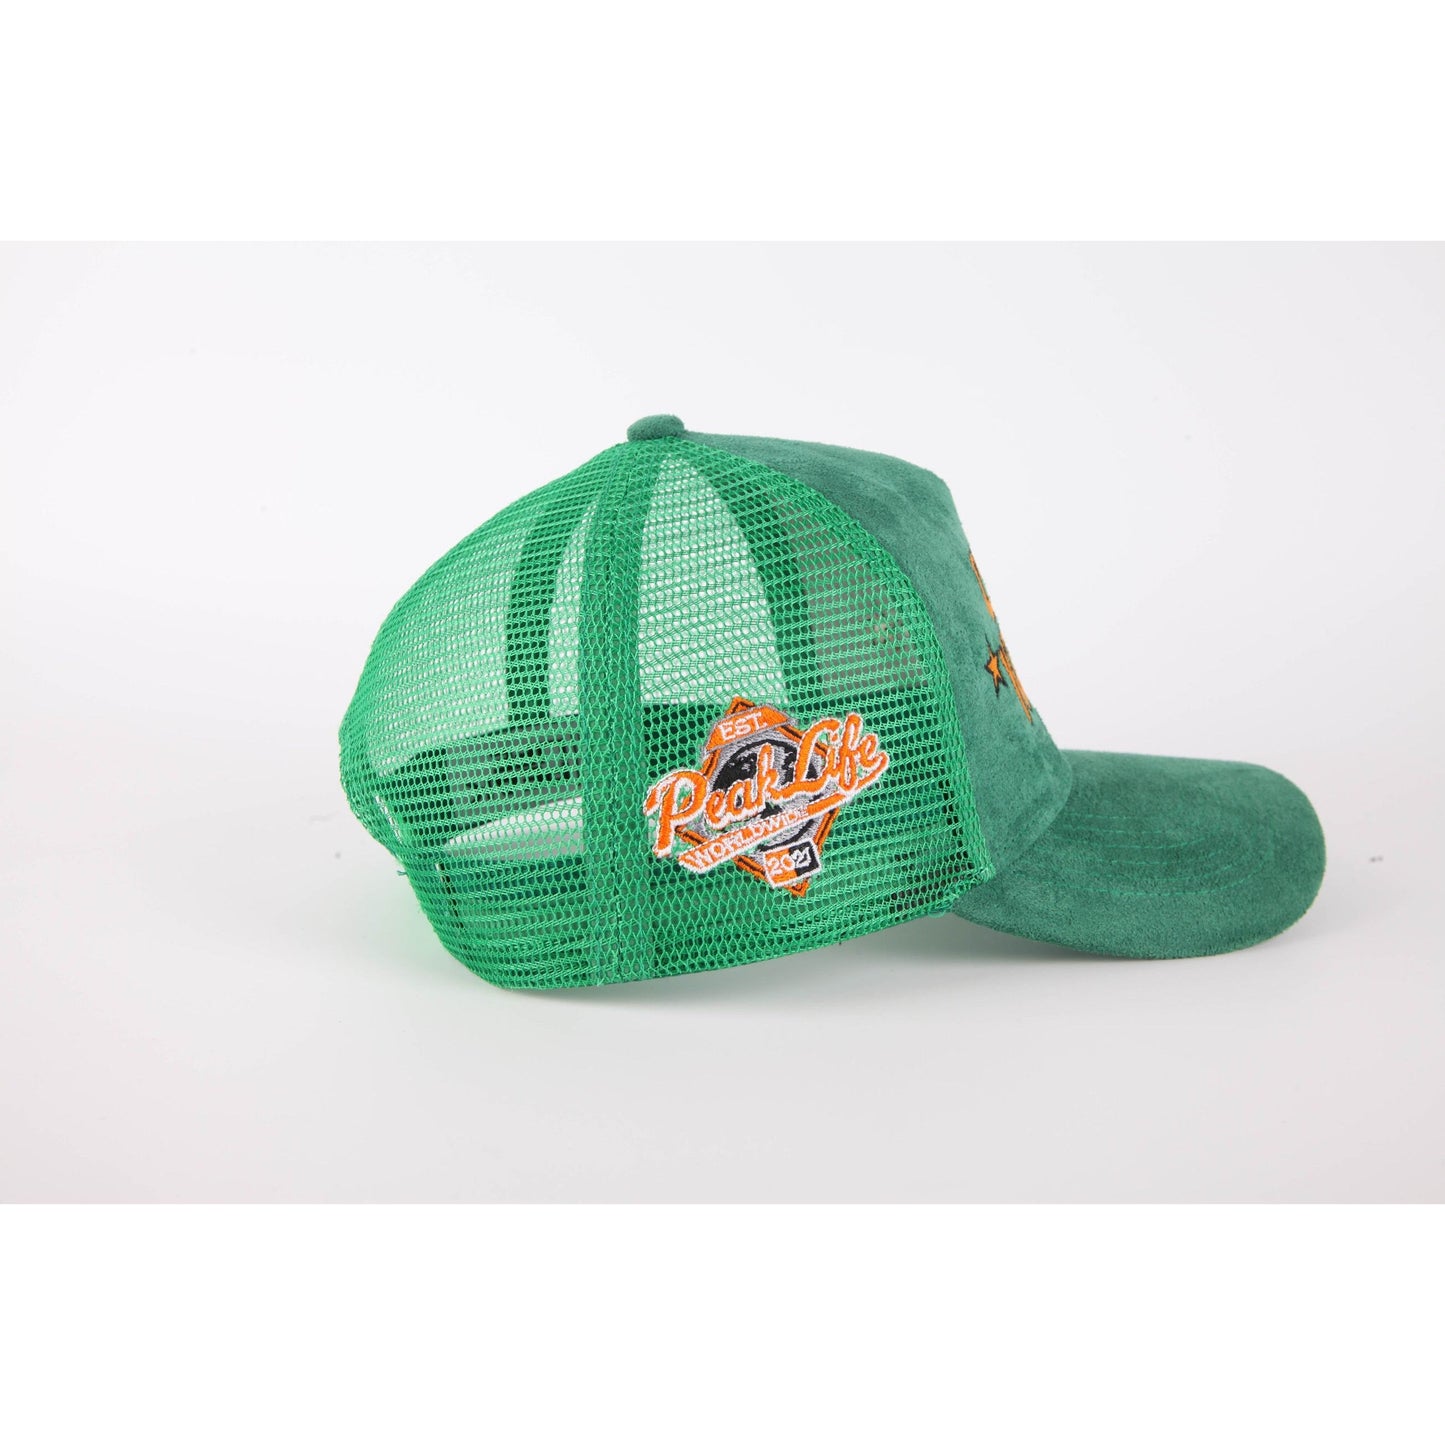 Choose Yourself Green Suede Trucker Hat